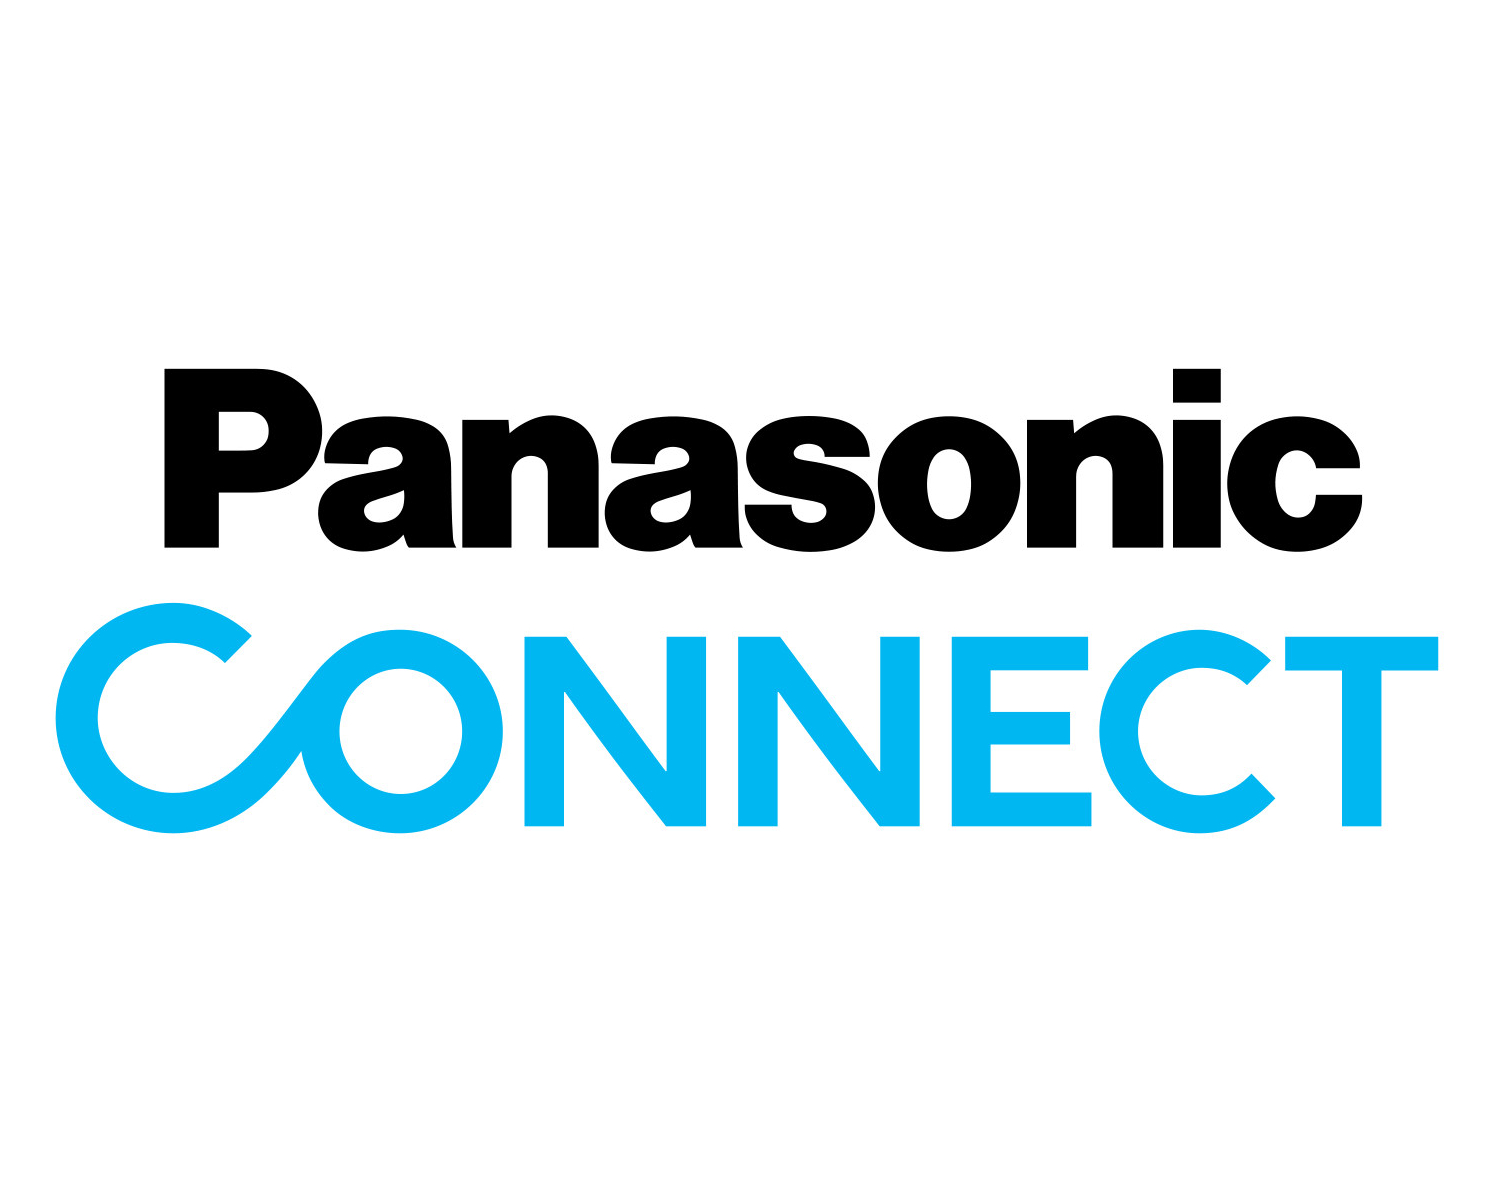 Panasonic Connect